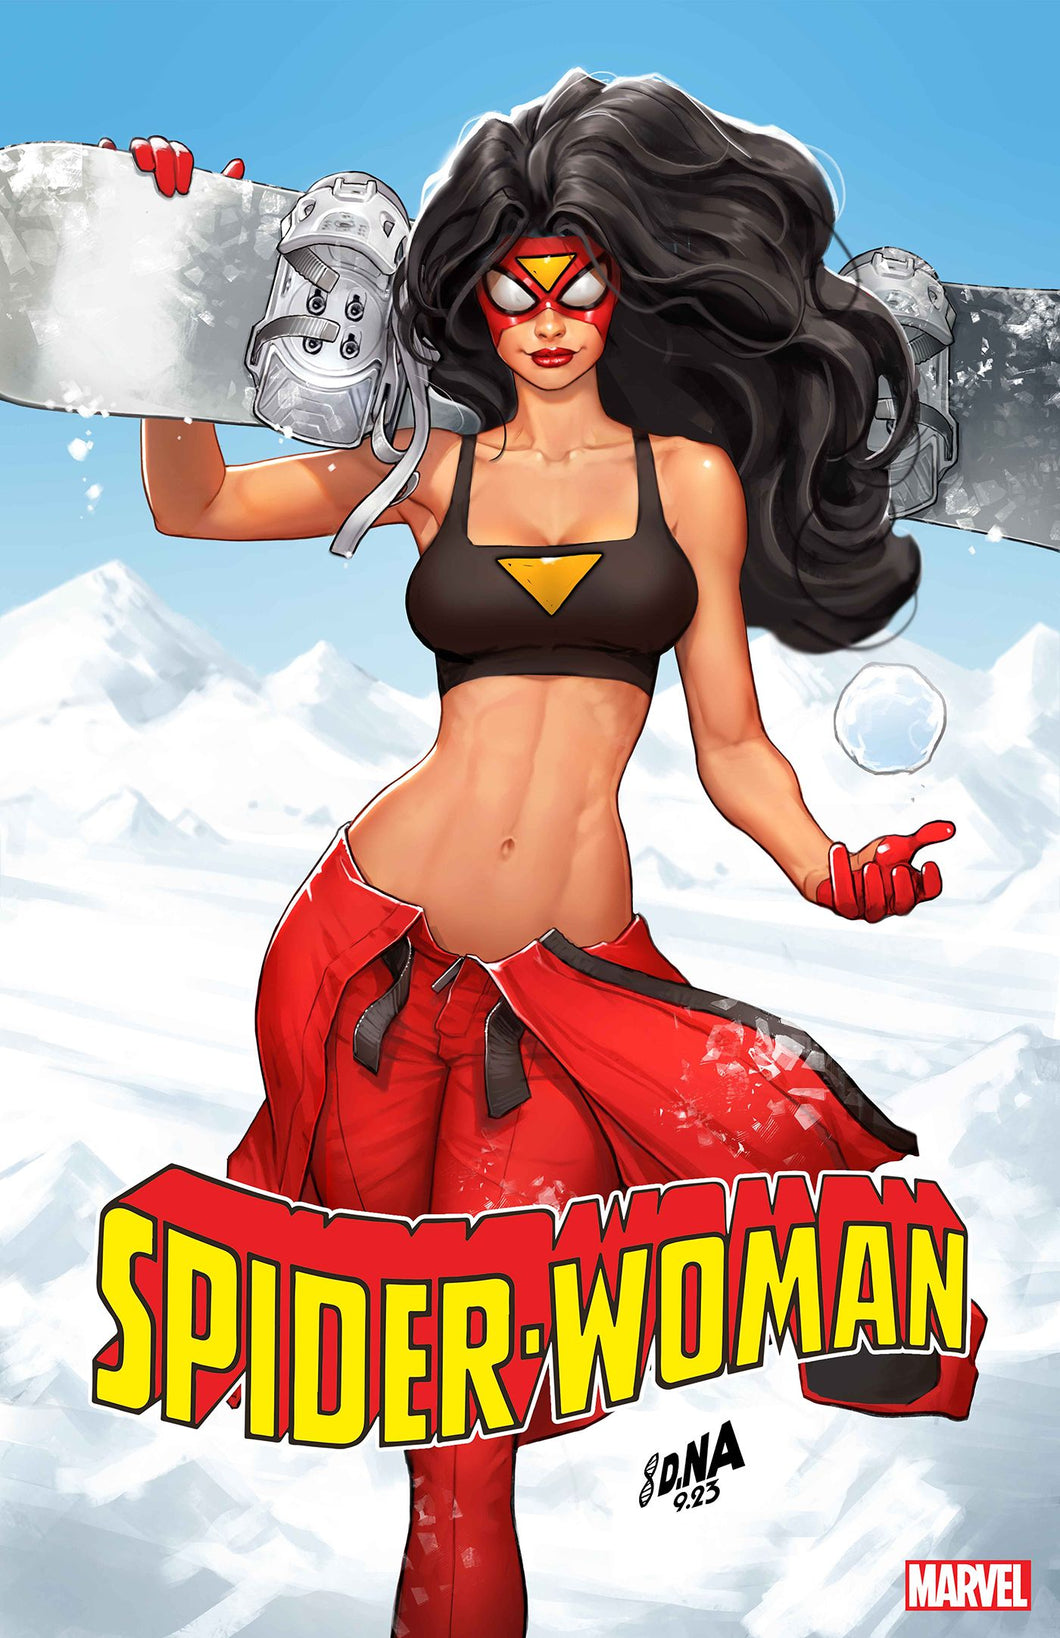 SPIDER-WOMAN #2 (DAVID NAKAYAMA SKI CHALET VARIANT)